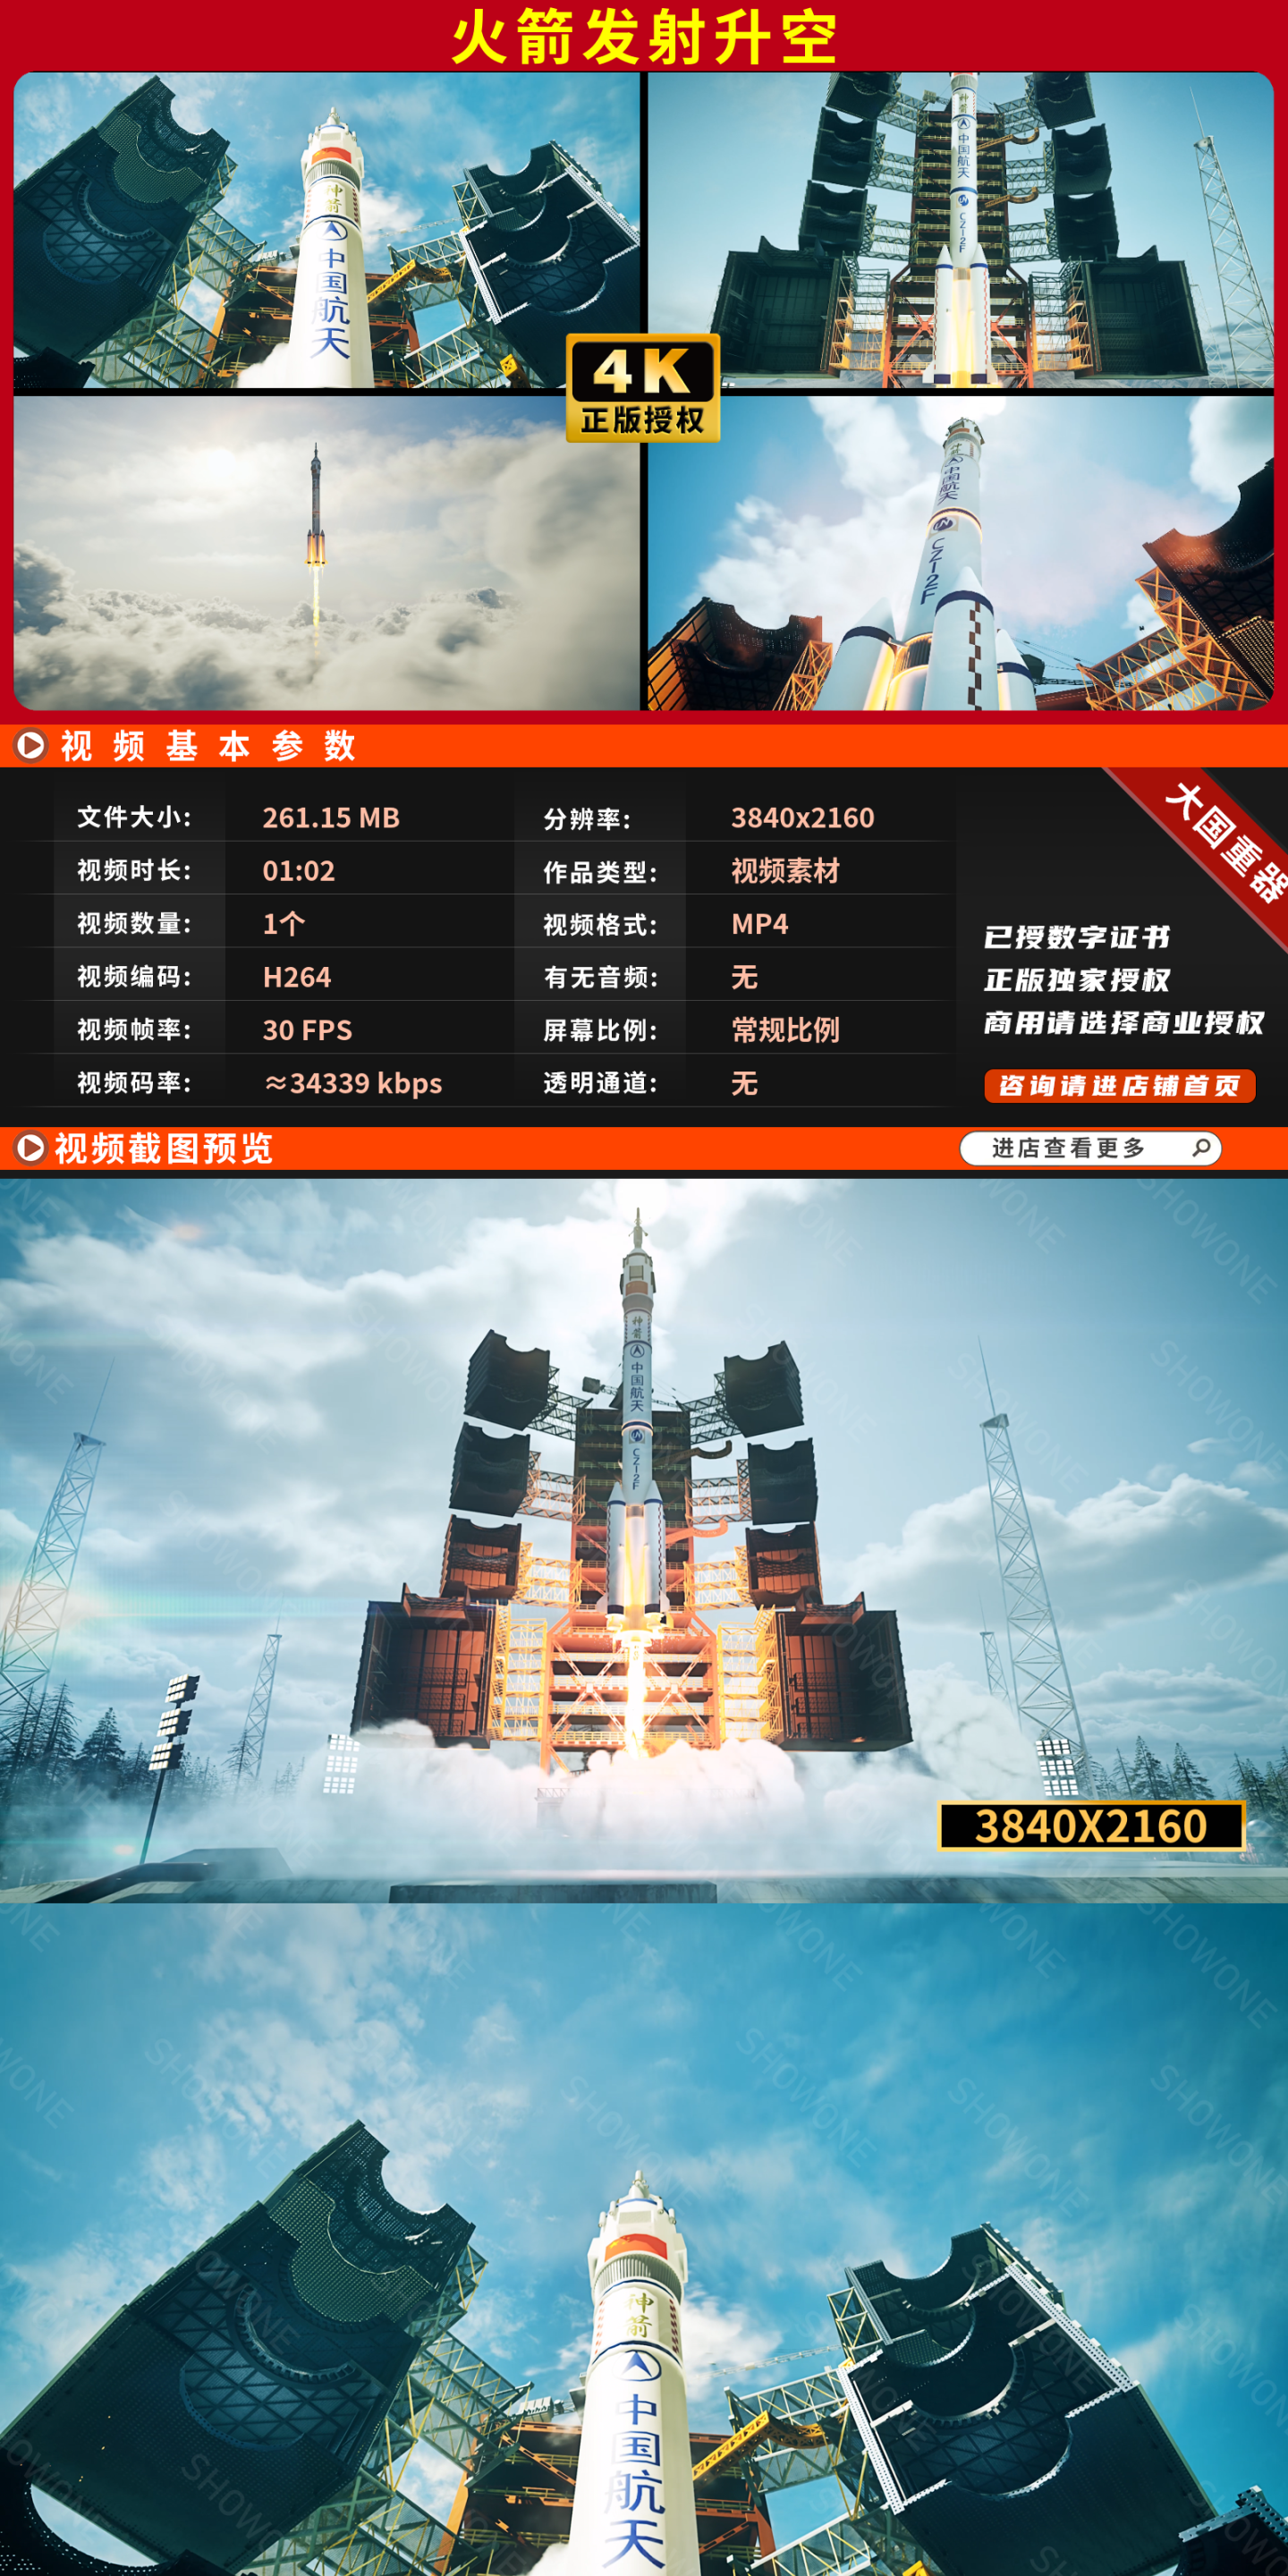 4K长征火箭发射升空中国航天 大国重器